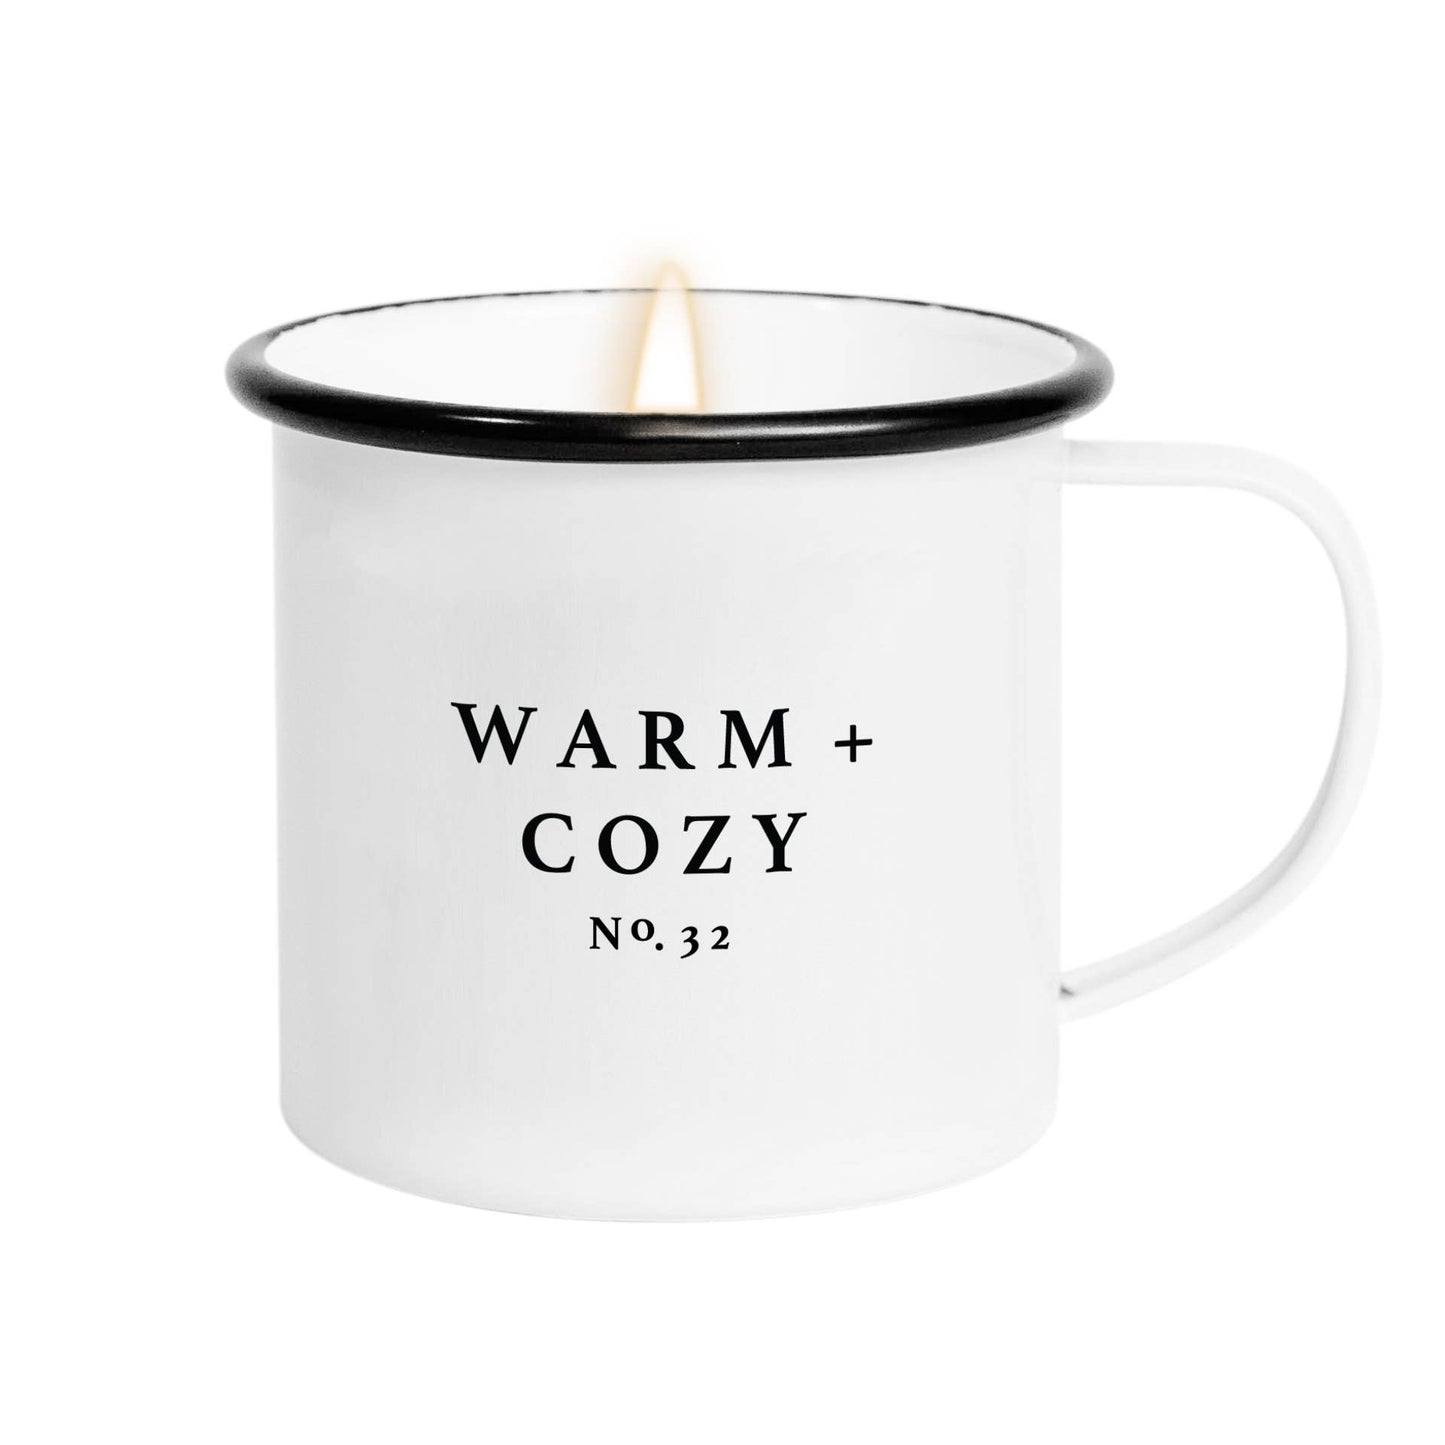 warm and cozy soy candle - coffee mug candle - 11 oz